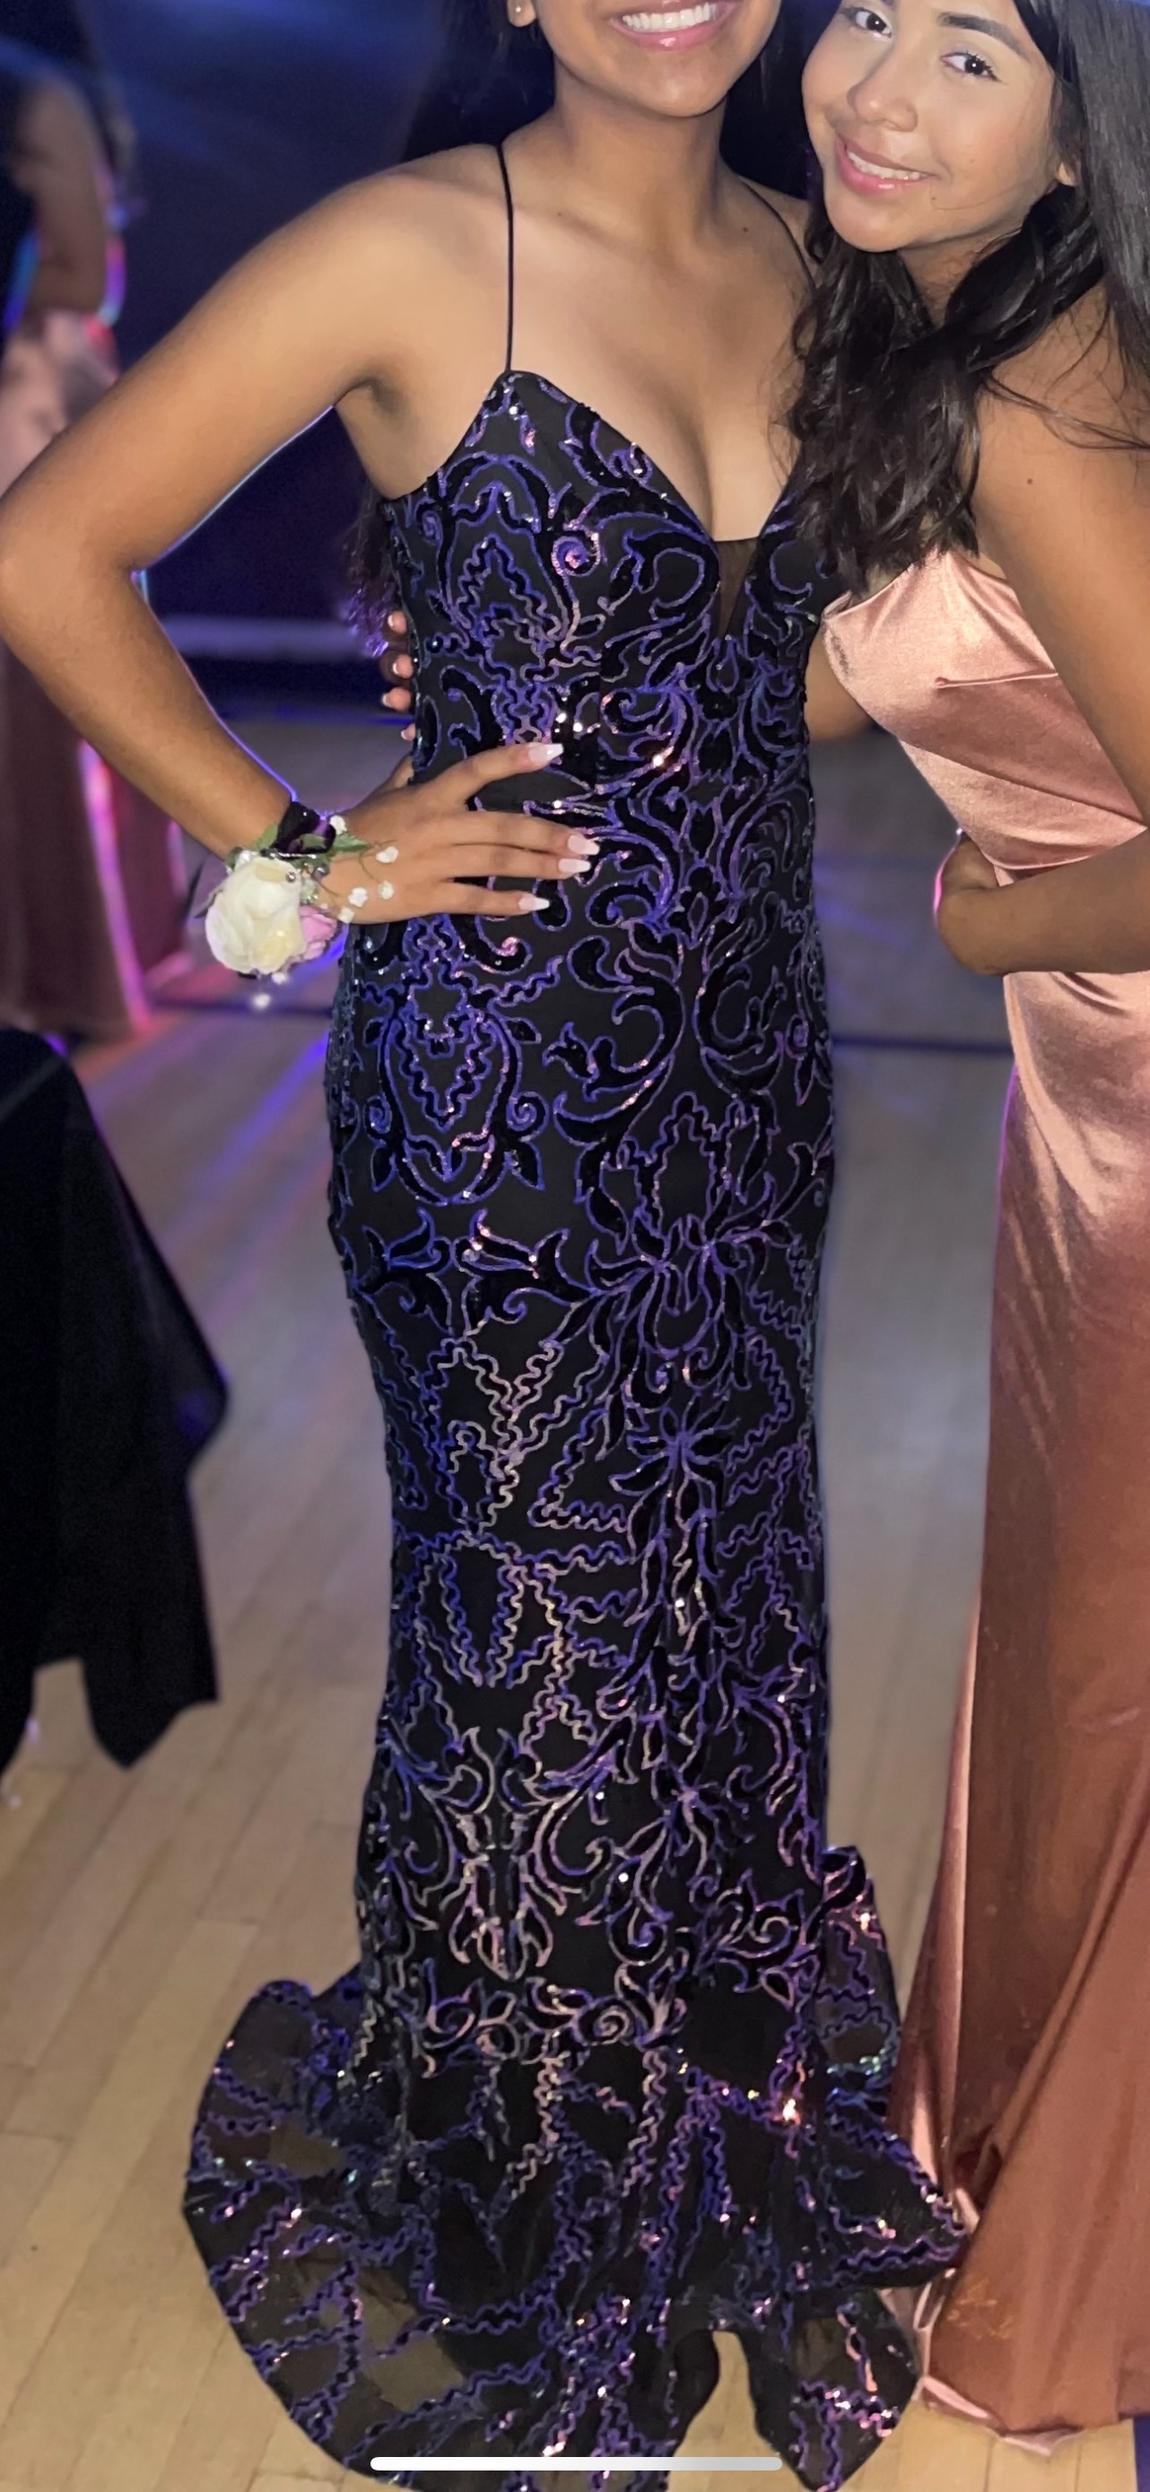 Size 0 Purple Mermaid Dress on Queenly